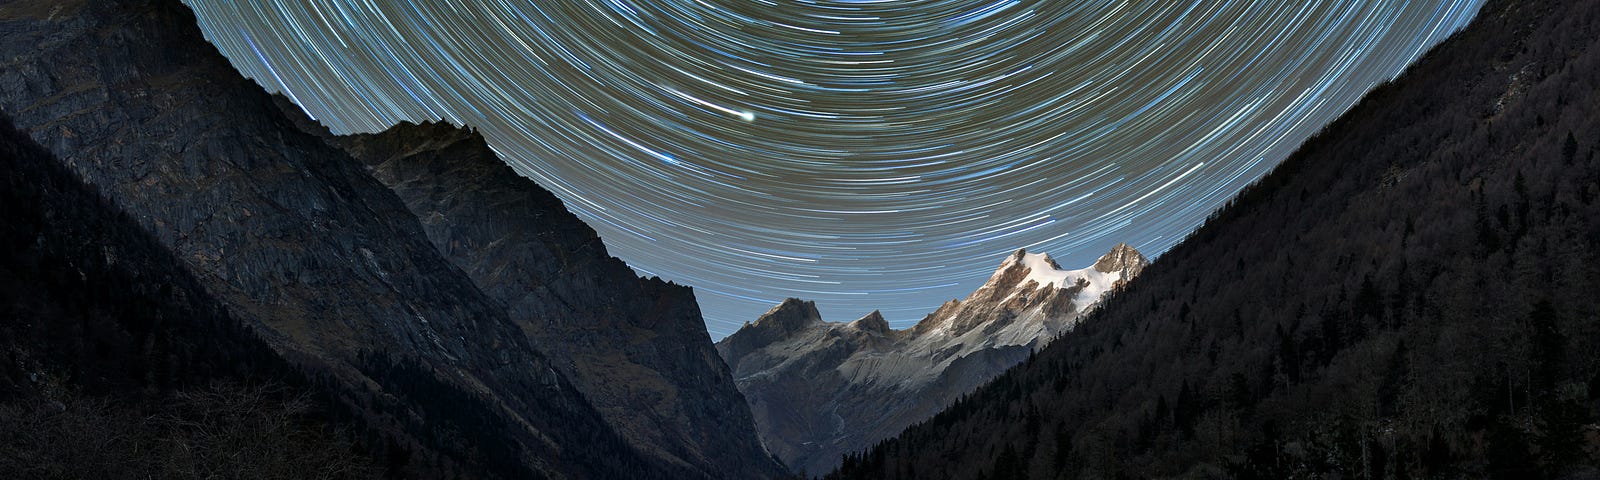 Spiraling stars in a dark night scene in the mountains